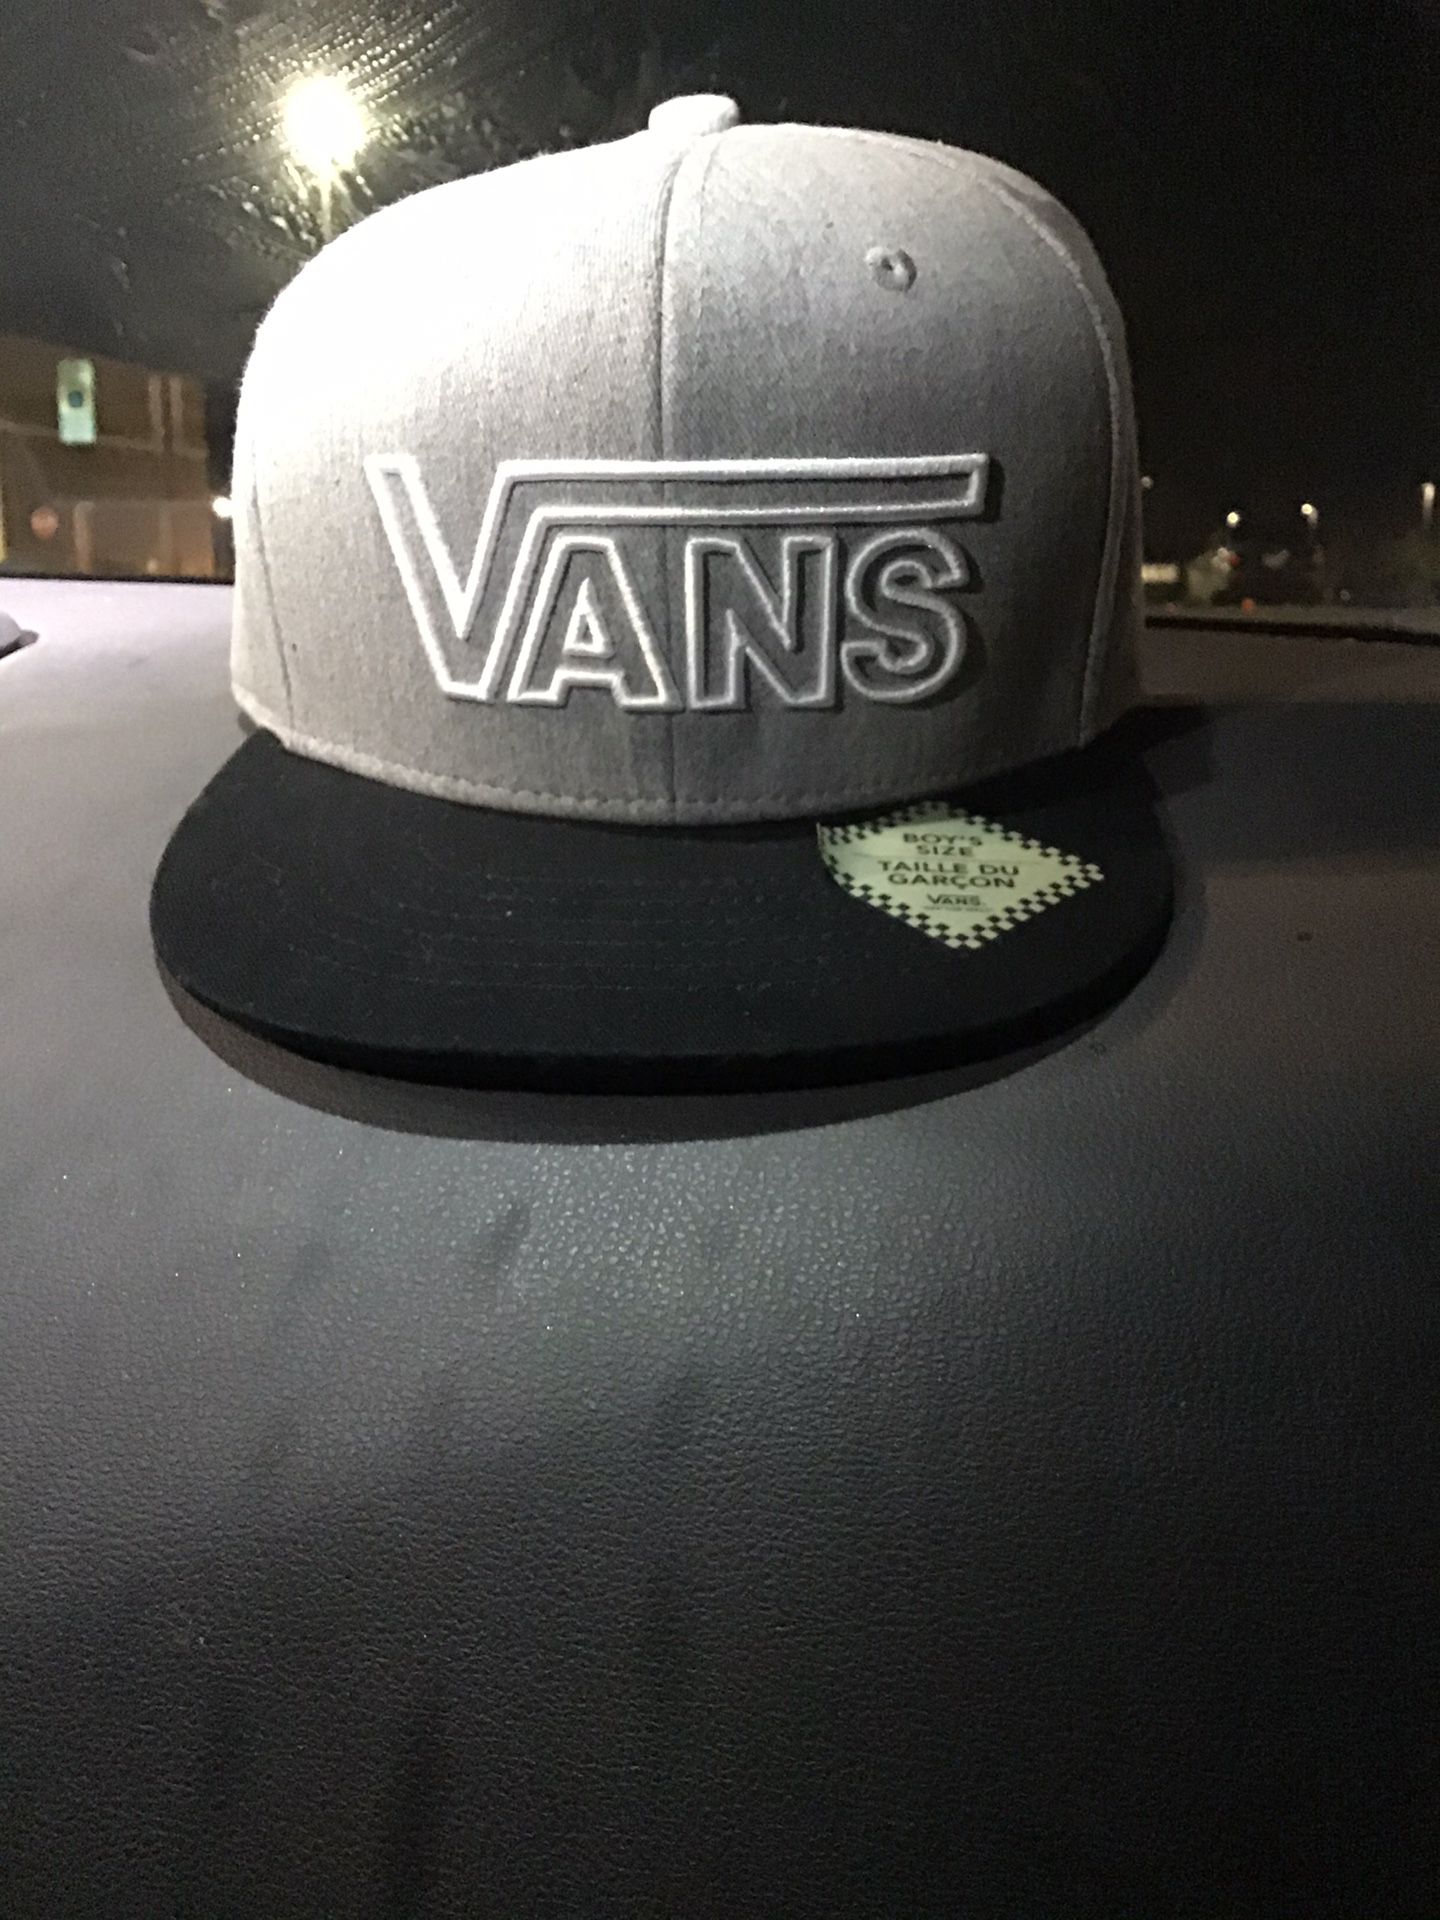 Youth vans hat